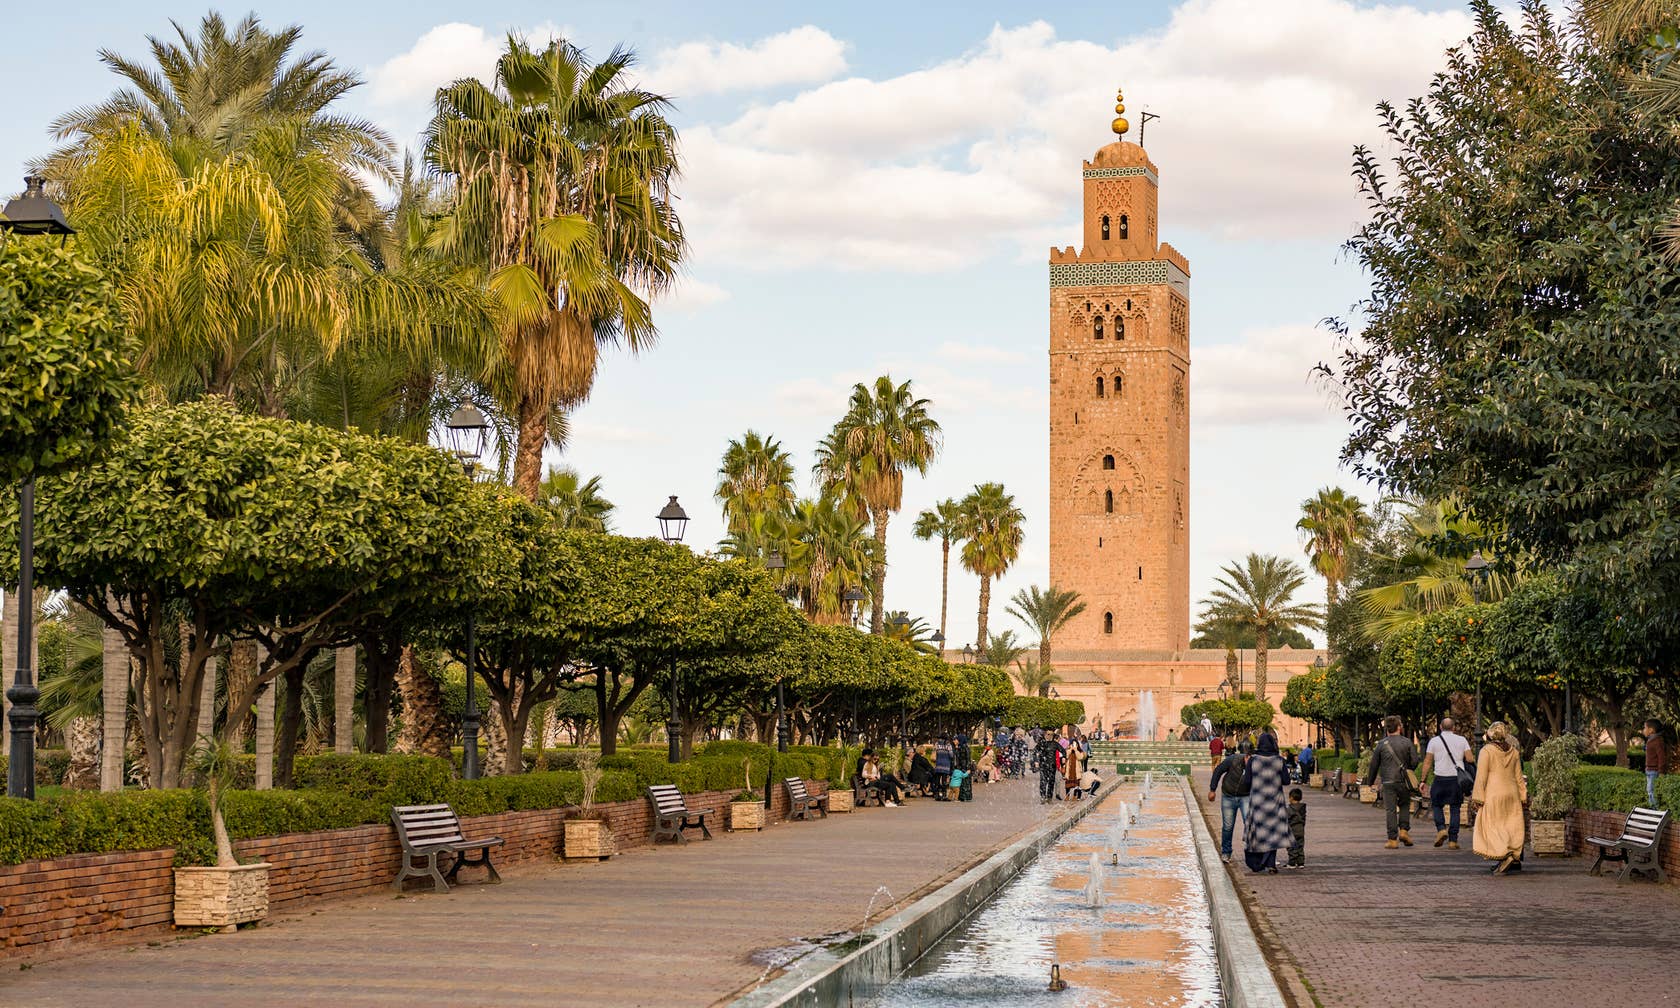 Semesterboende i Marocko